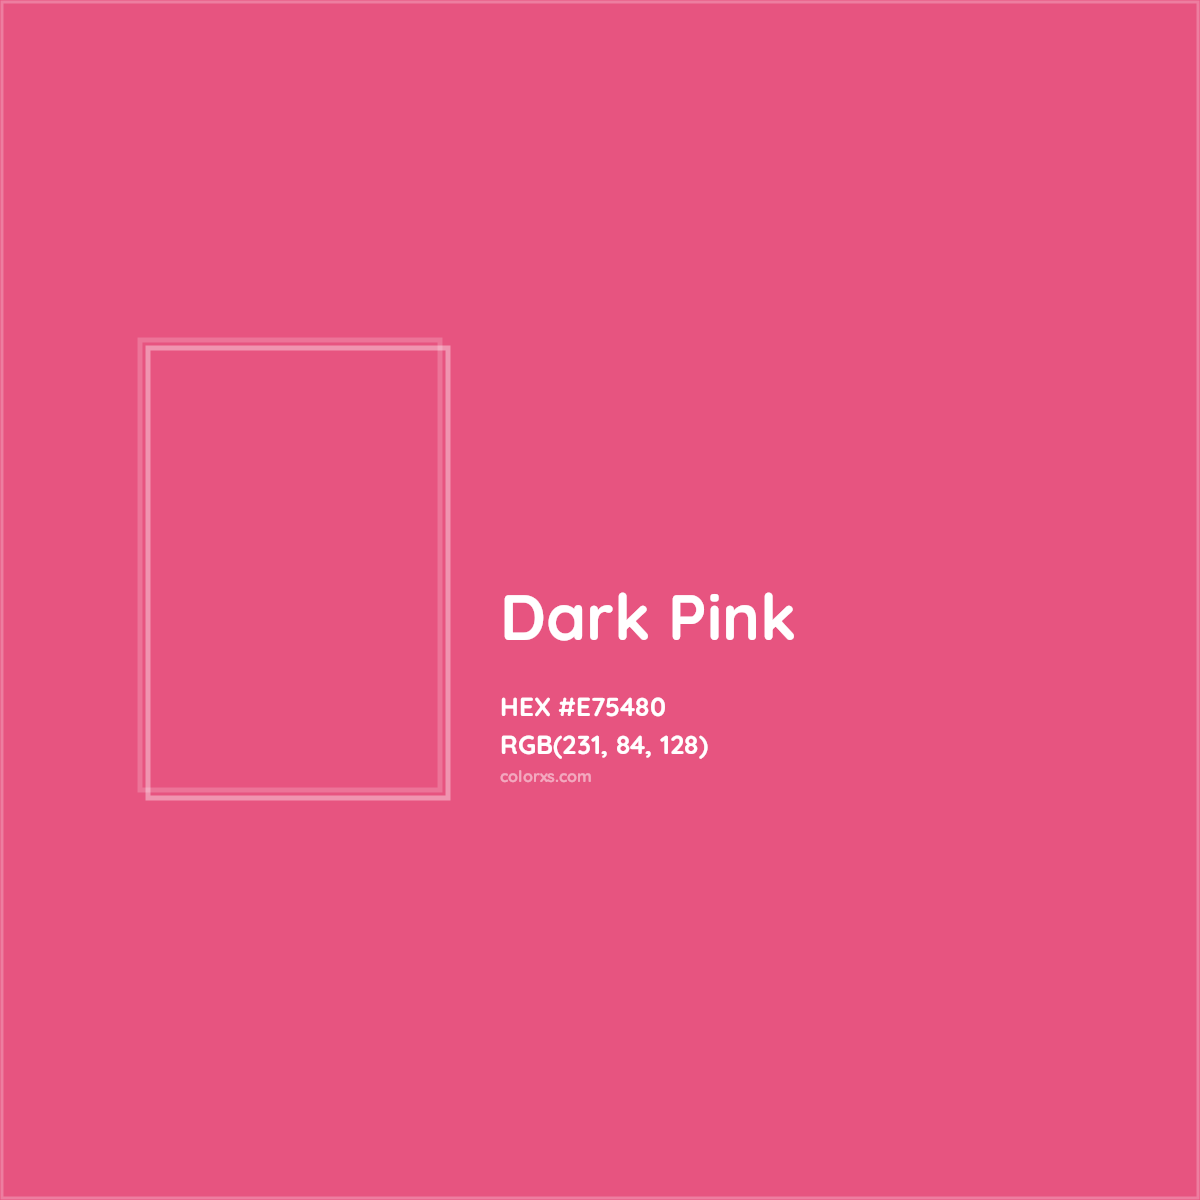 HEX #E75480 Dark Pink Color - Color Code